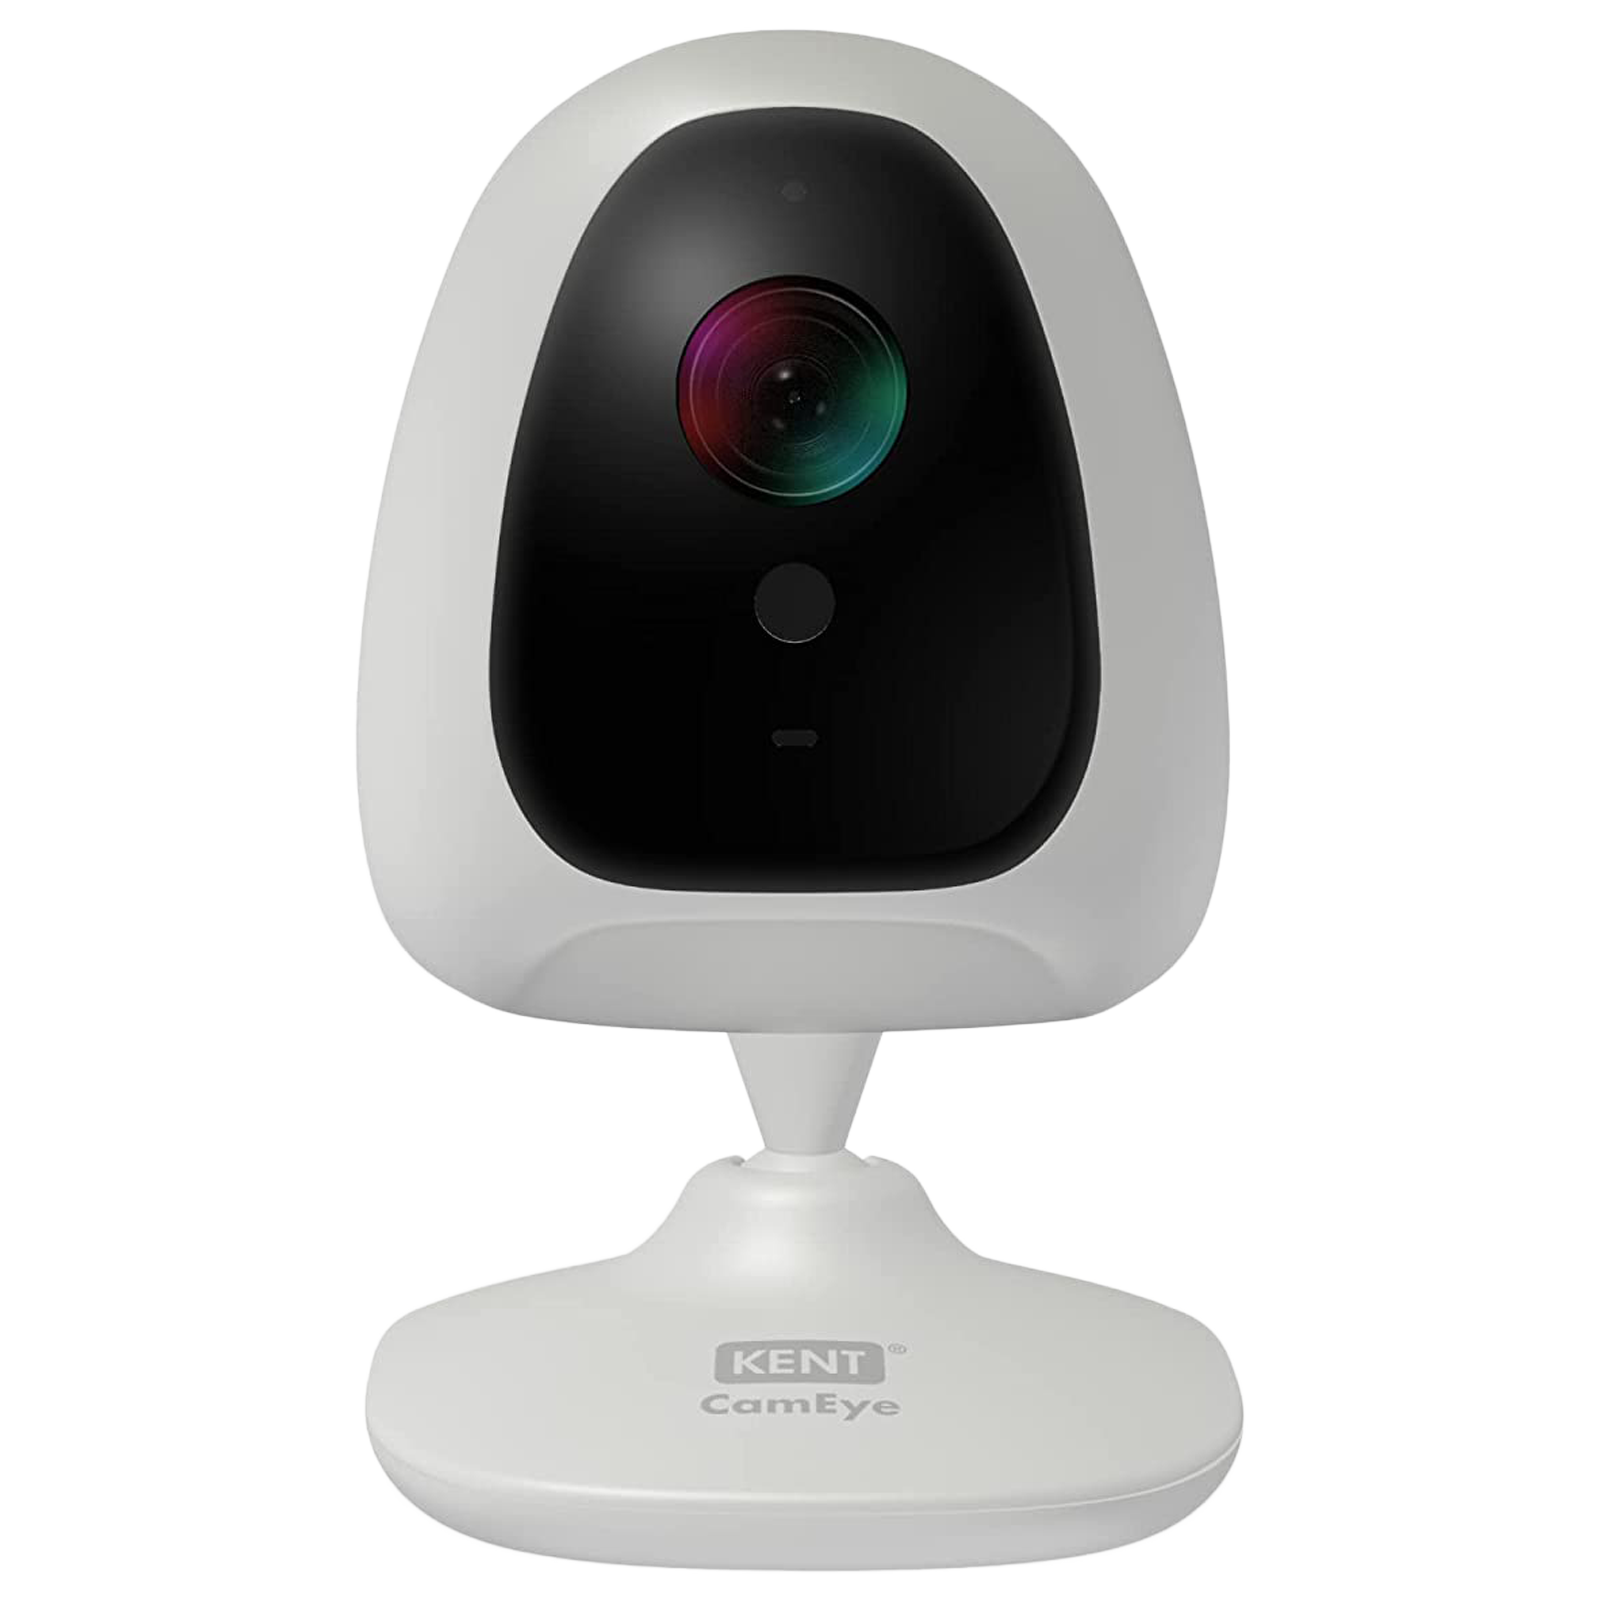 KENT HomeCam Genie IP CCTV Security Camera (AI Motion and Human Detection, 17012, White)